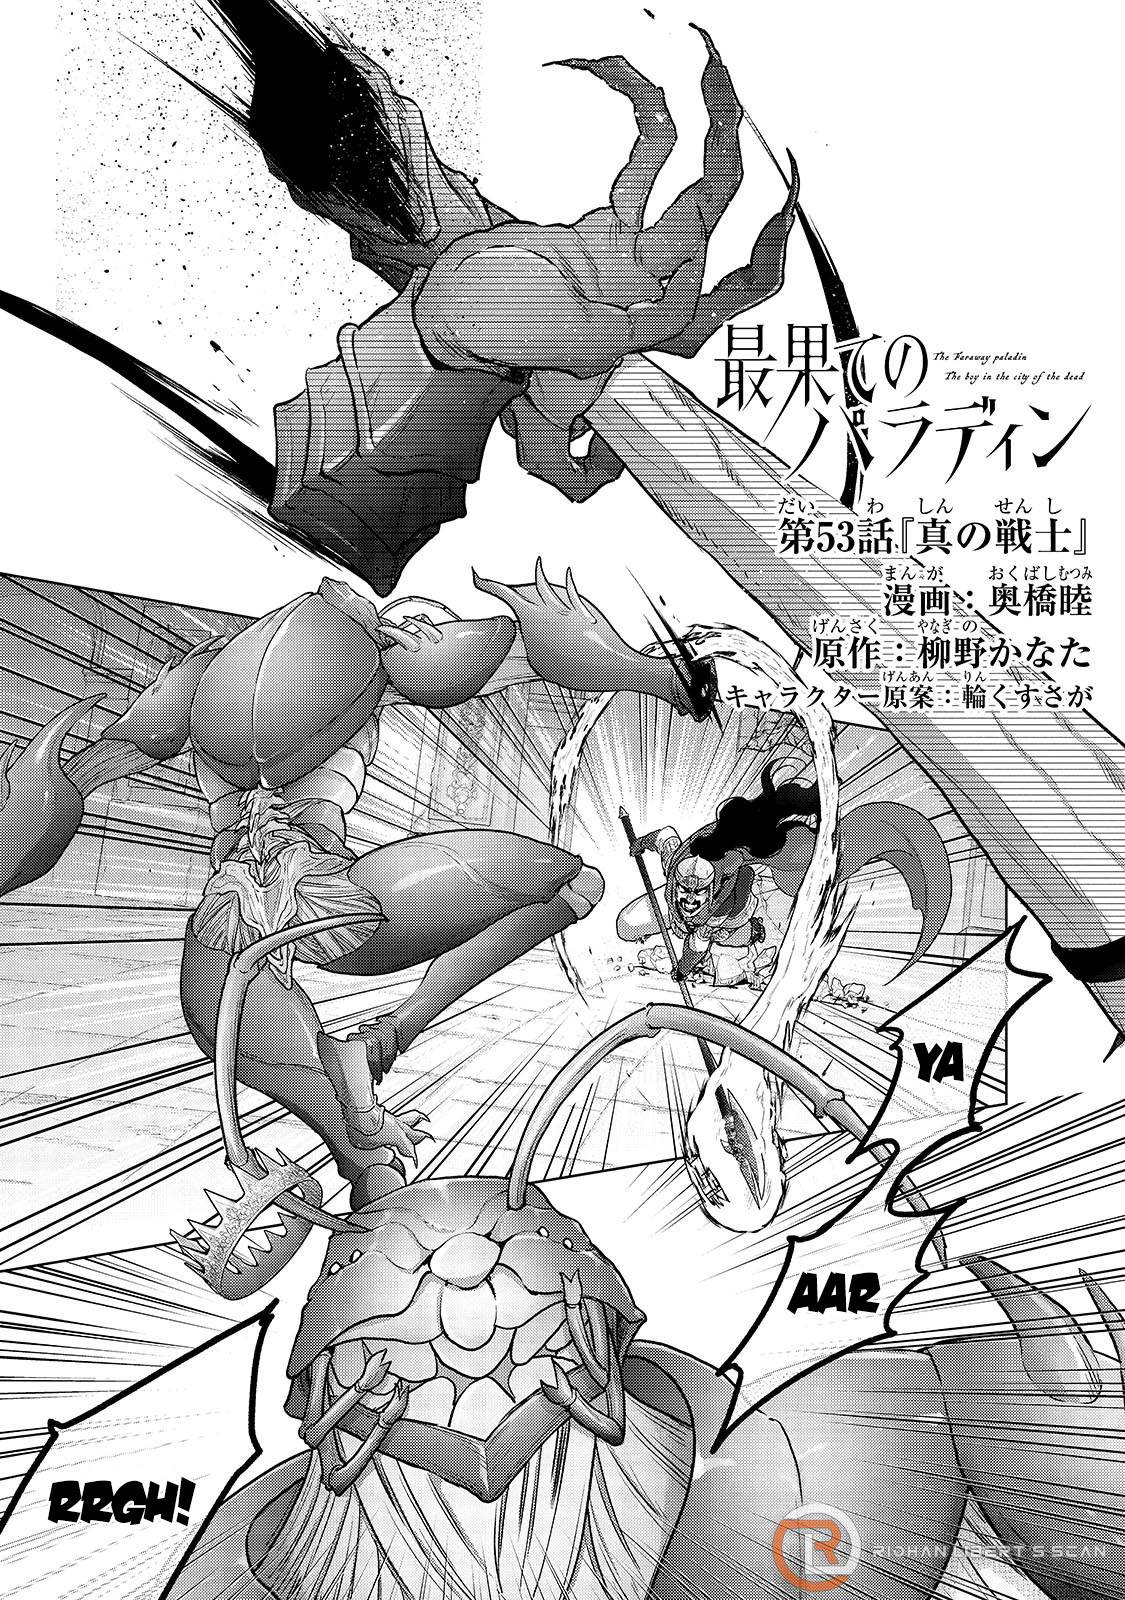 DISC] Saihate No Paladin - Chapter 53.1 : r/manga